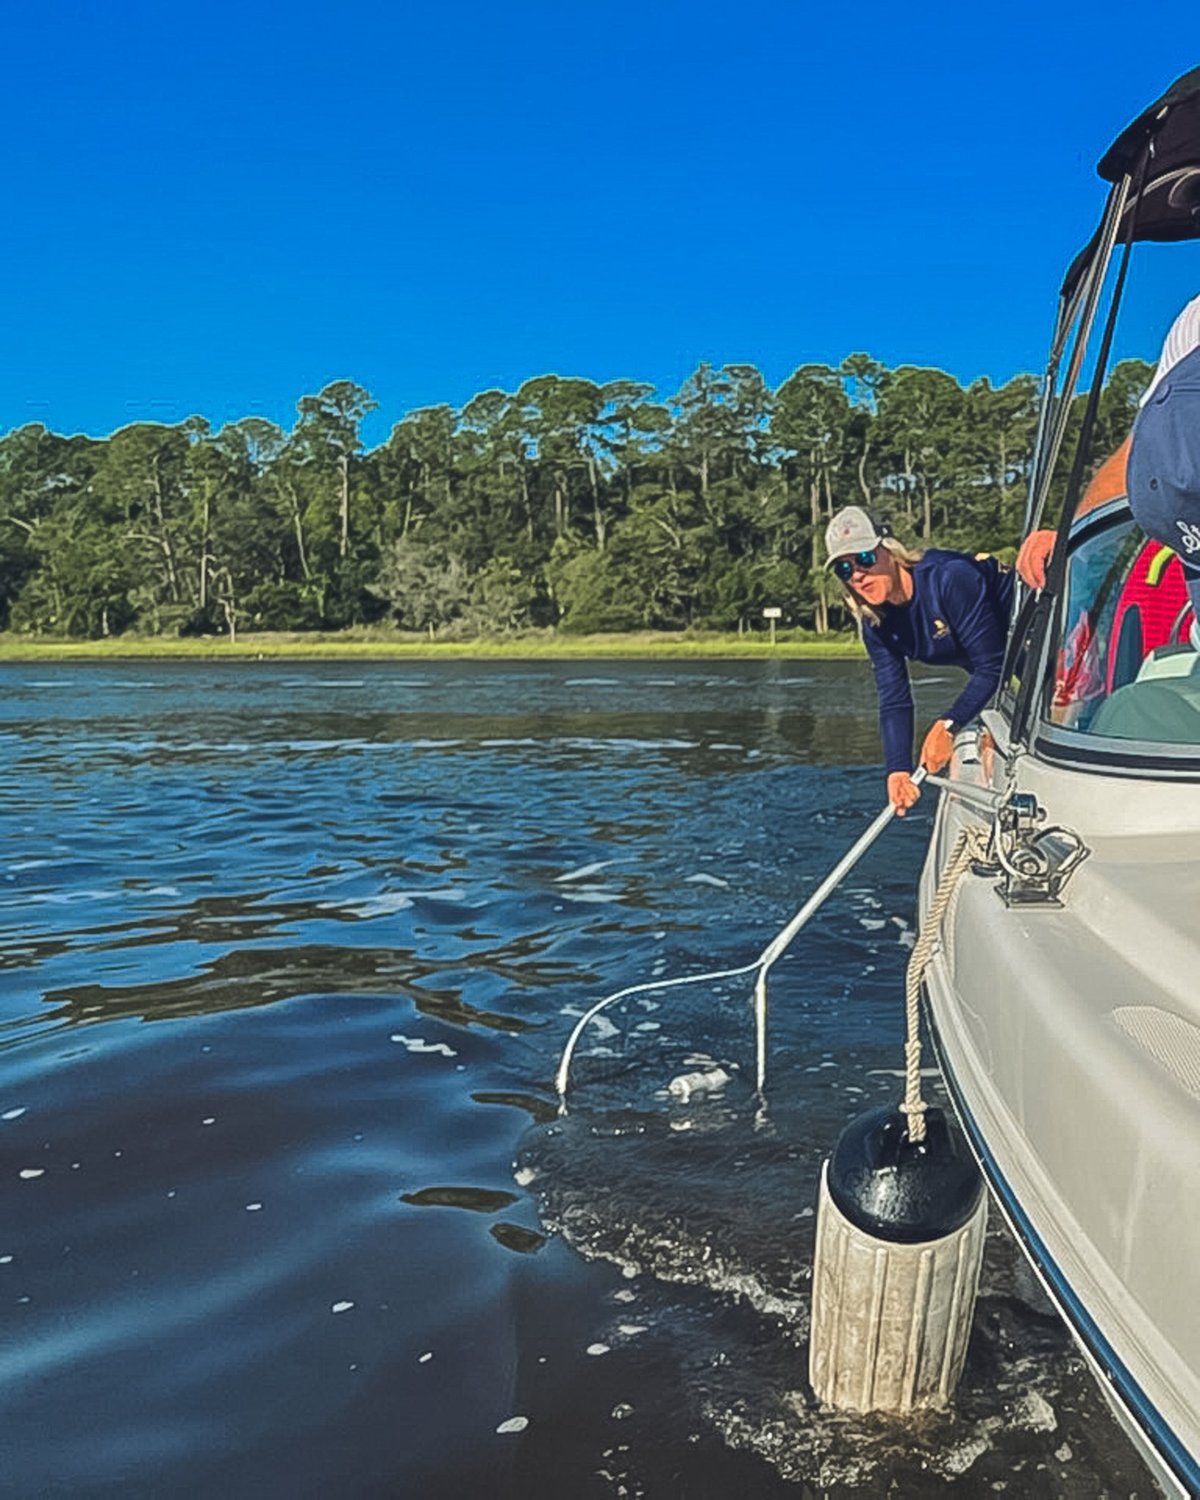 Seven Realtor volunteers led by Cherya Cavanaugh of Keller Williams Atlantic Partners boarded a powerboat to clean up the Intercoastal Waterway from Ponte Vedra to St. Augustine.